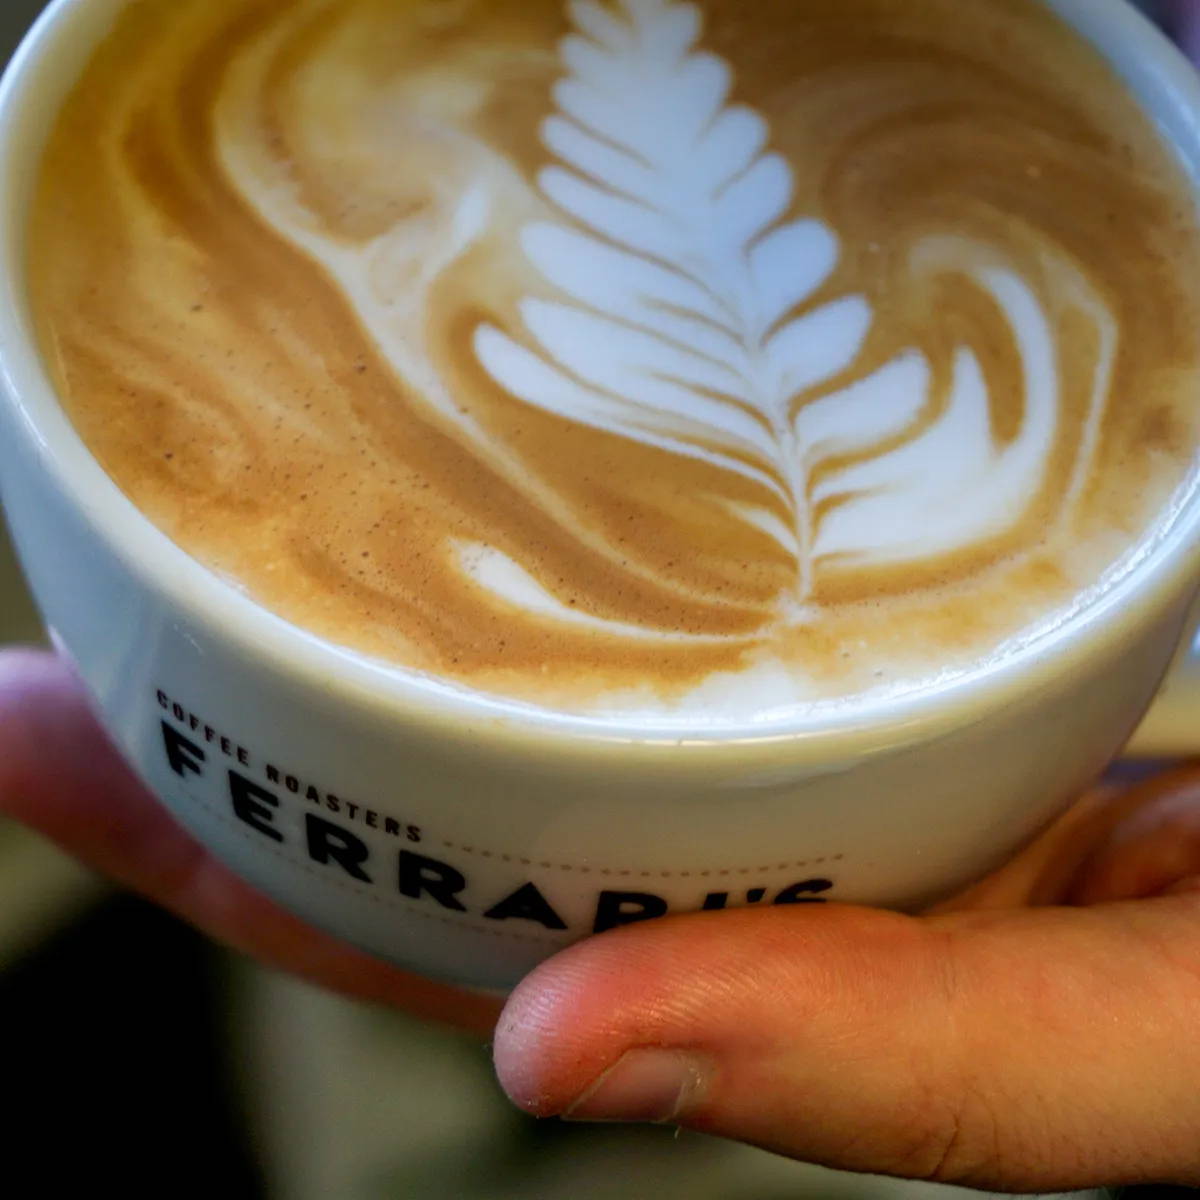 Ferrari's Coffee, a hand-holding Ferrari's Cup with latte art